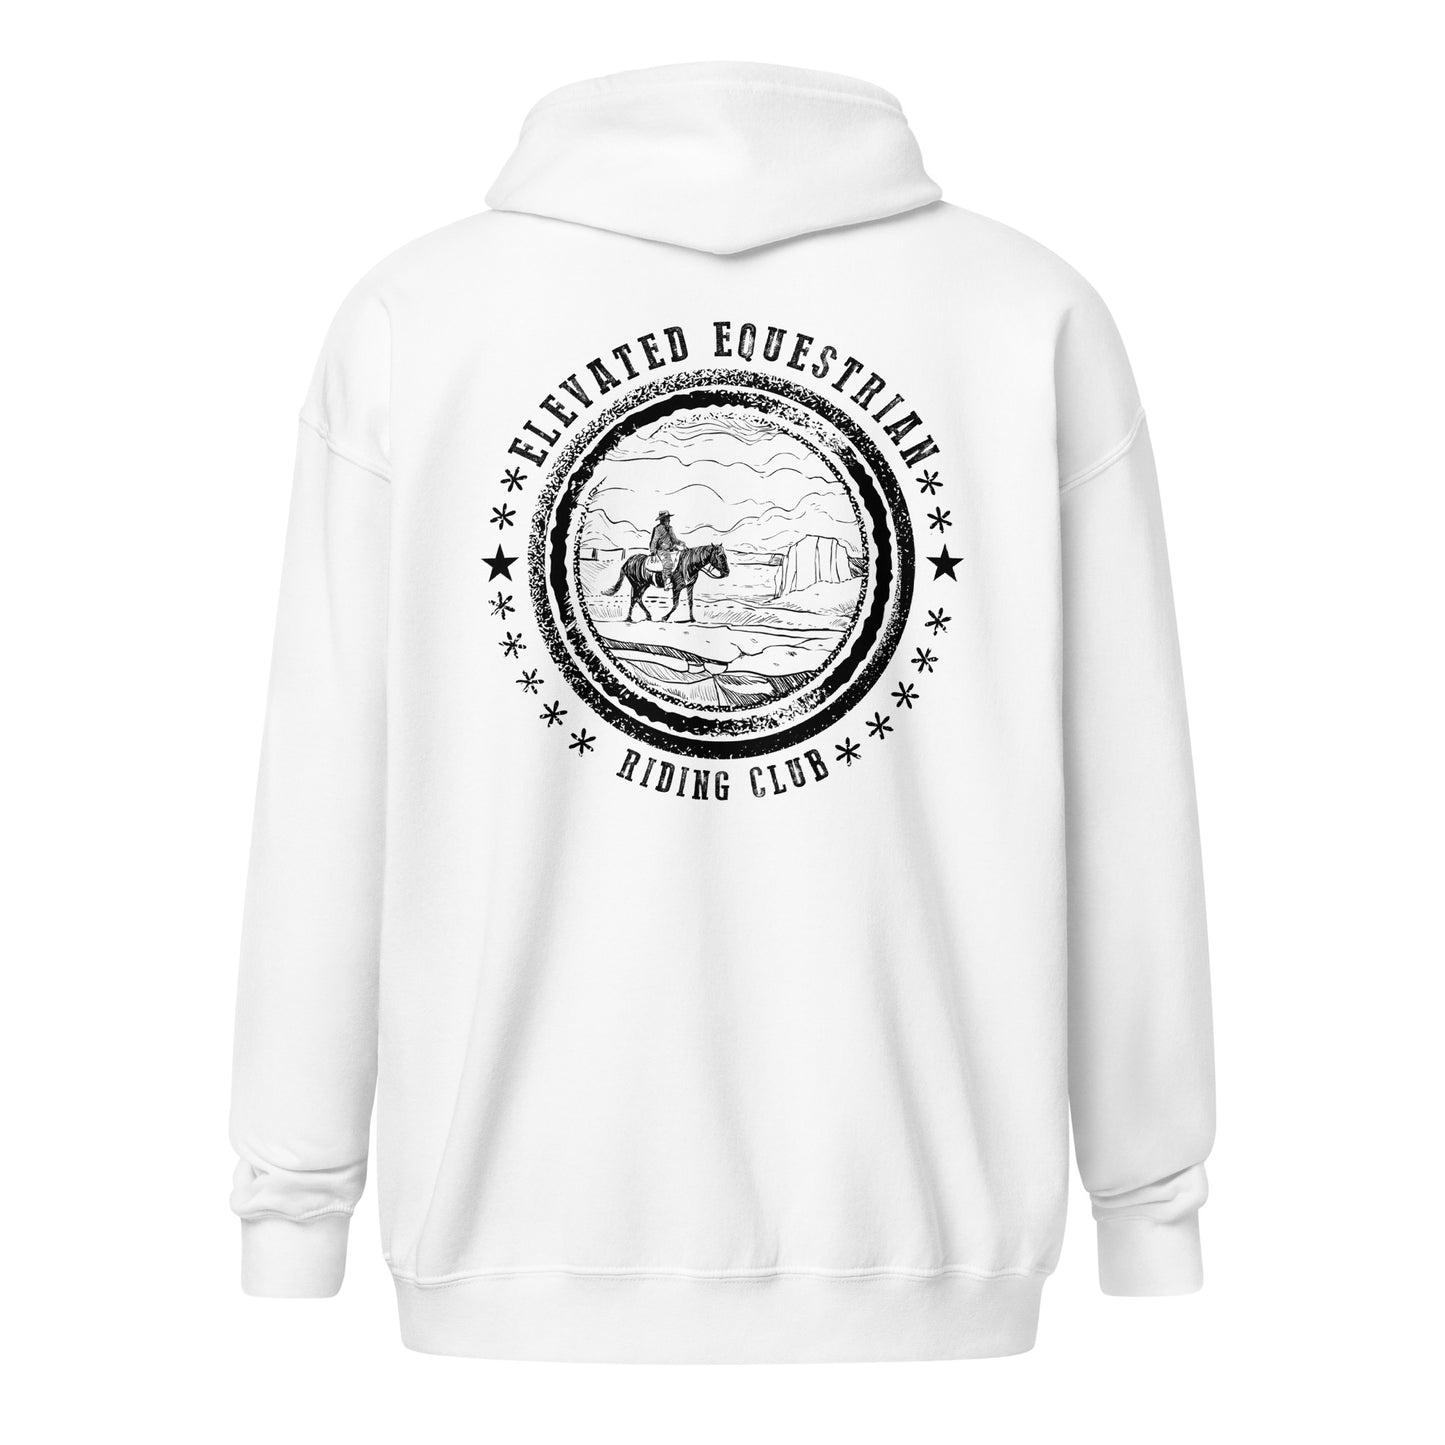 Elevated Equestrian Riding Club White Unisex Zip-up Hooded Sweatshirt